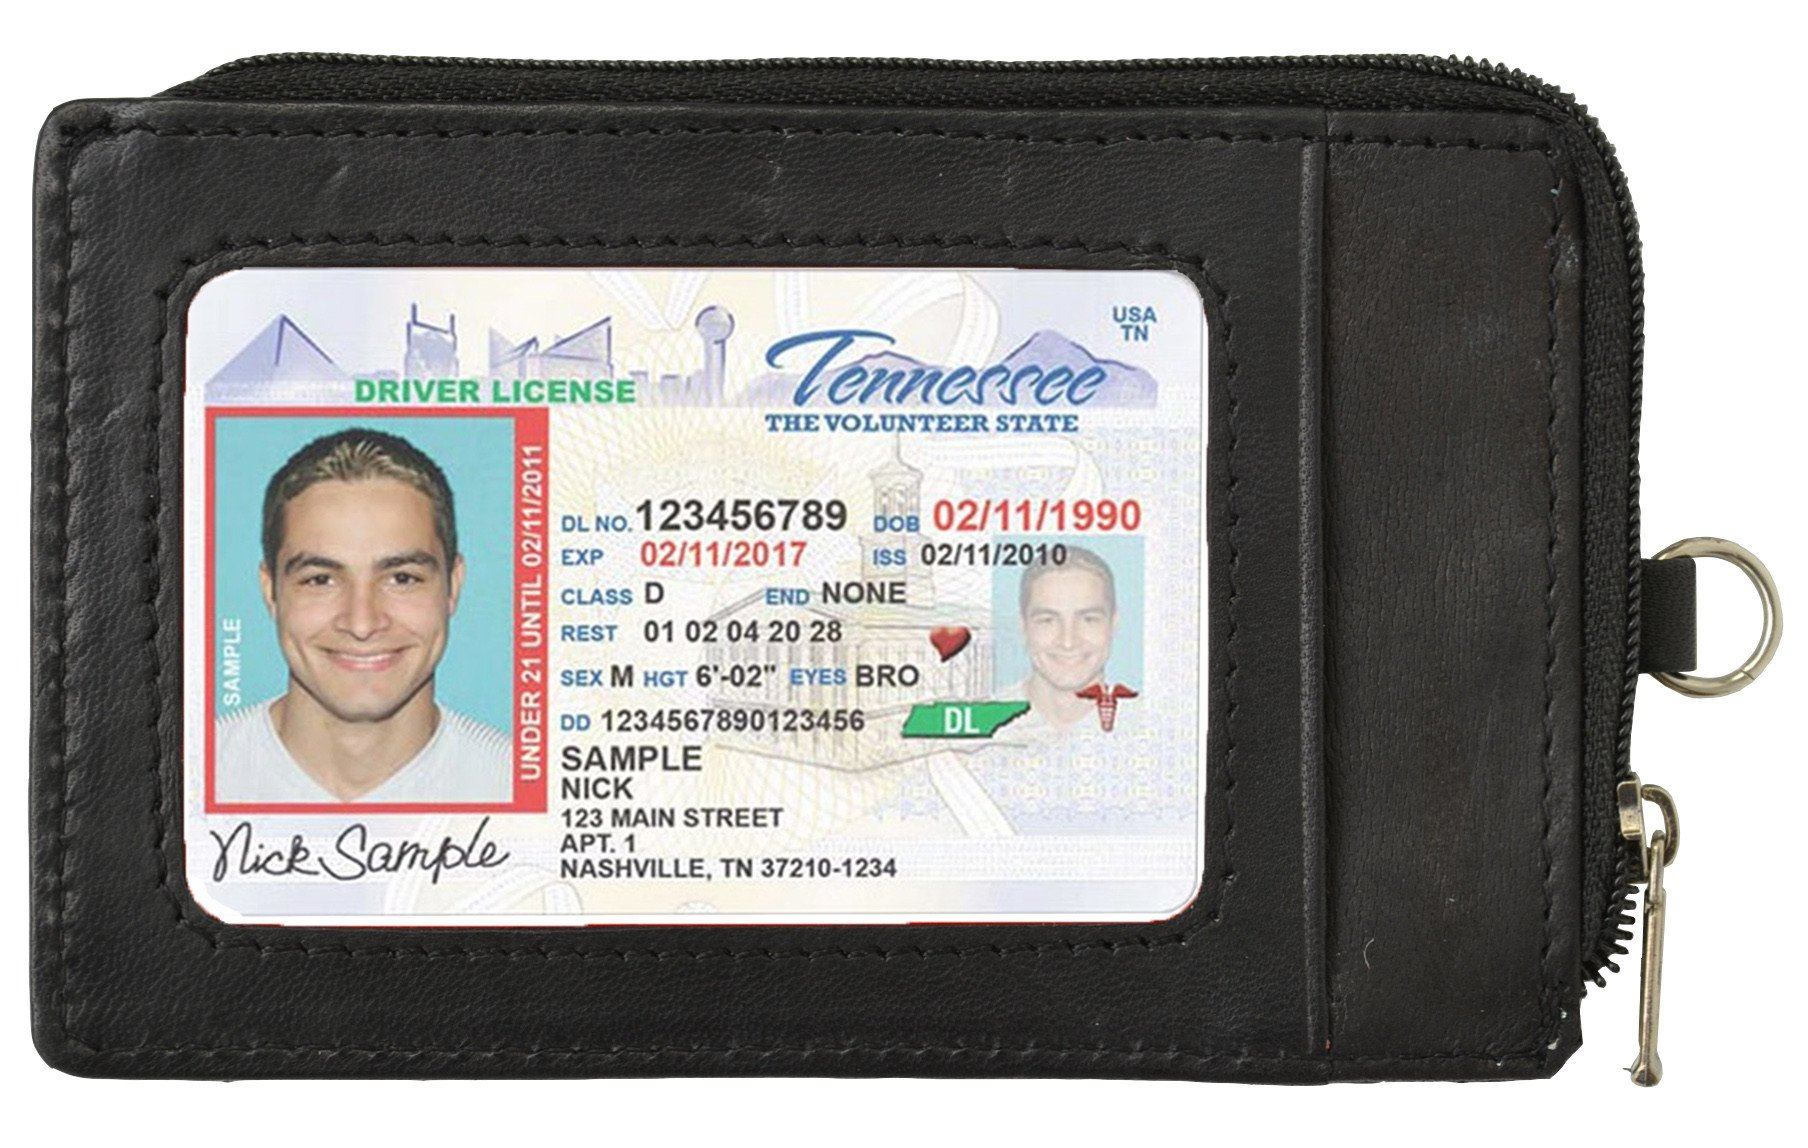 RFID Slim Leather Black Neck Wallet